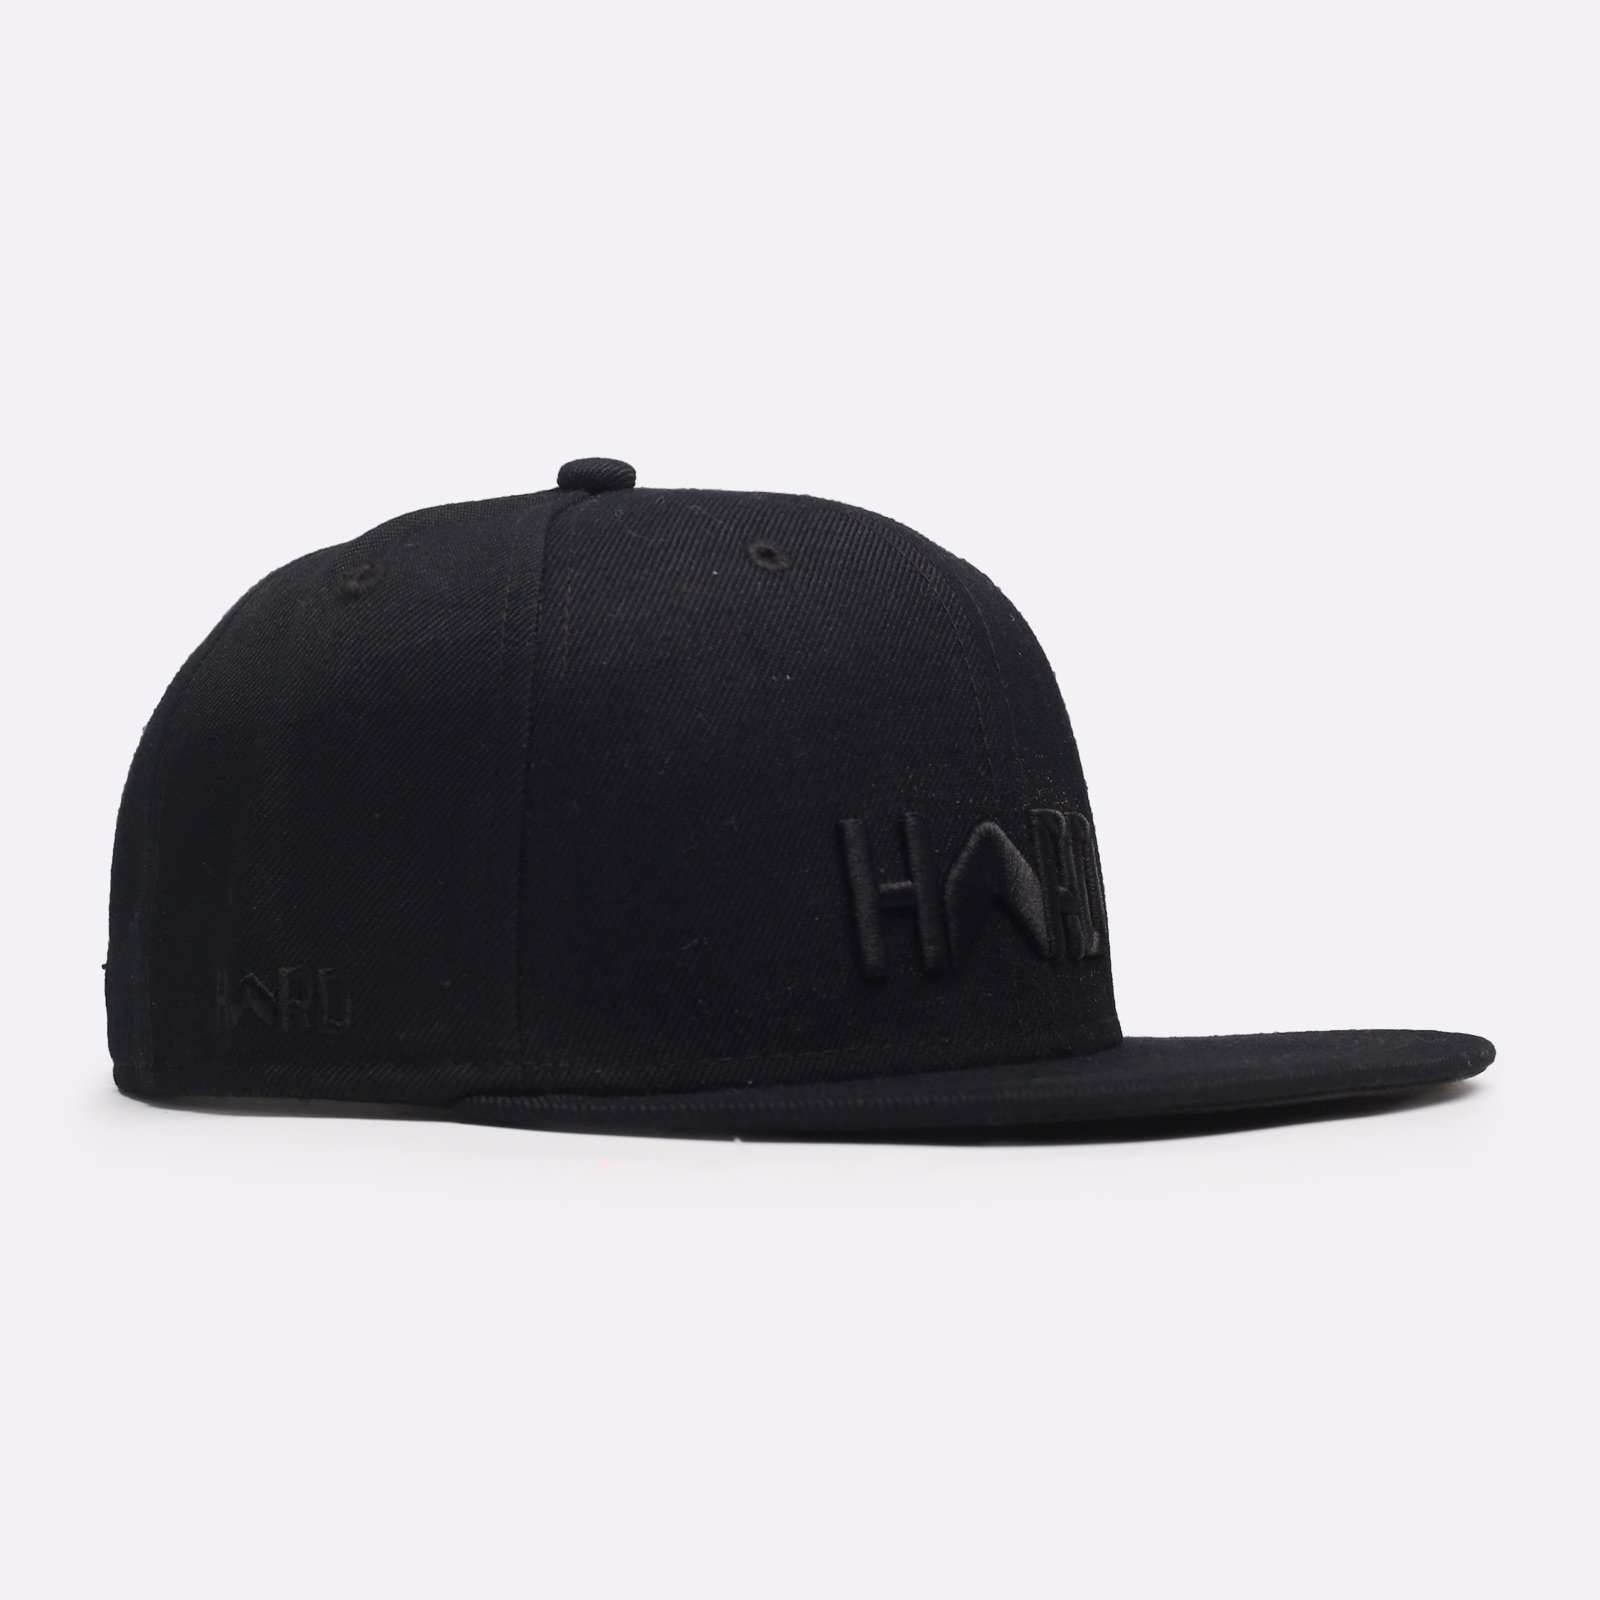 мужская черная кепка Hard Logo Snapback Hard blk/blk-0015 - цена, описание, фото 1